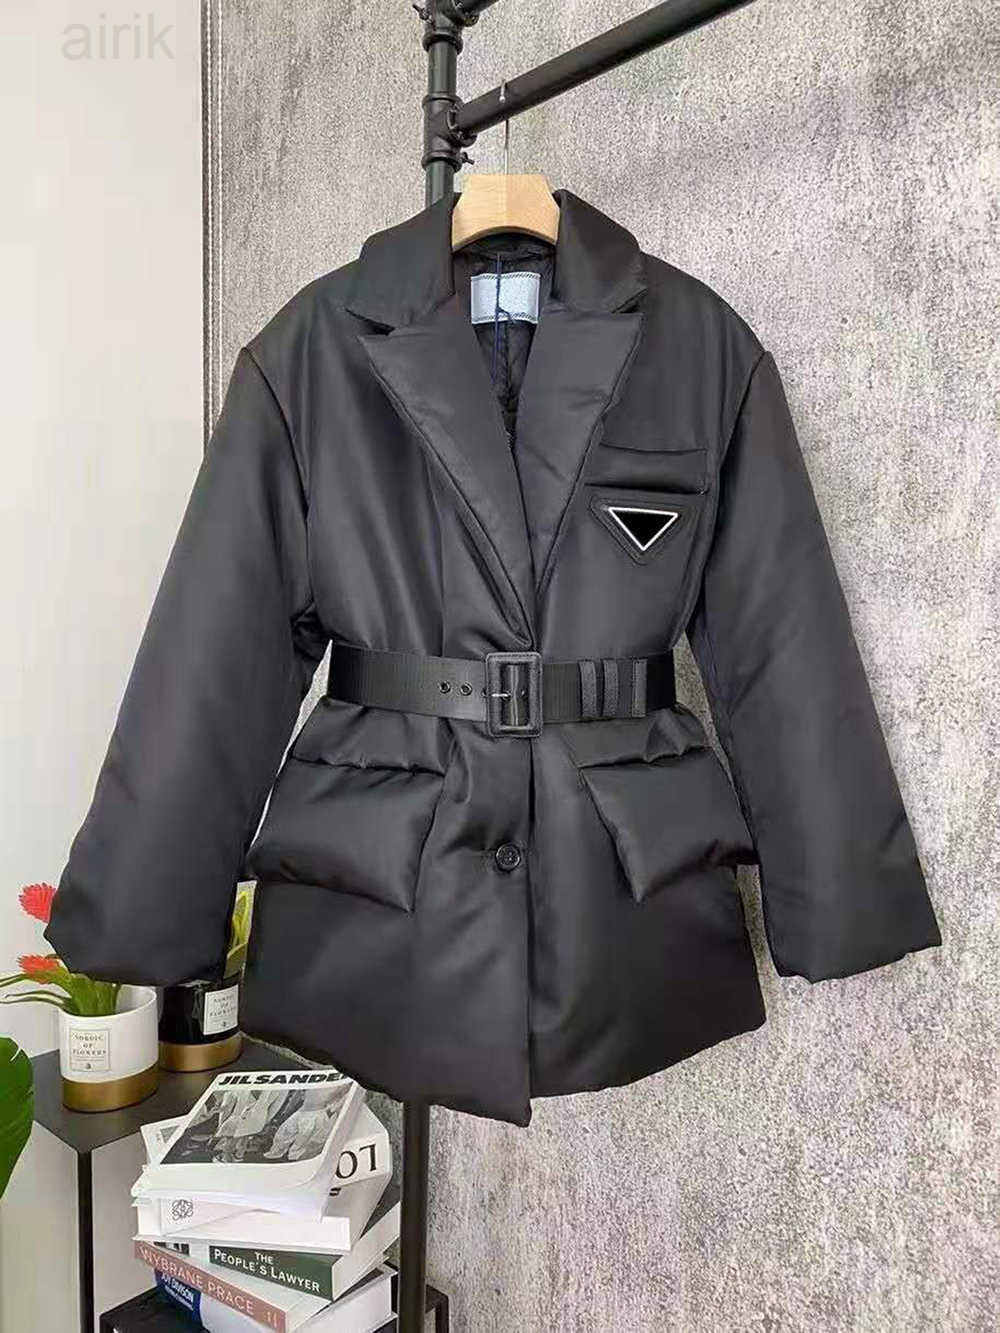 Designs Brand Womens Jacket Down Coats Winter Long Coat Fashion Style With Belt Corset Lady Slim Fashion Jackets Pocket Outsize Warm